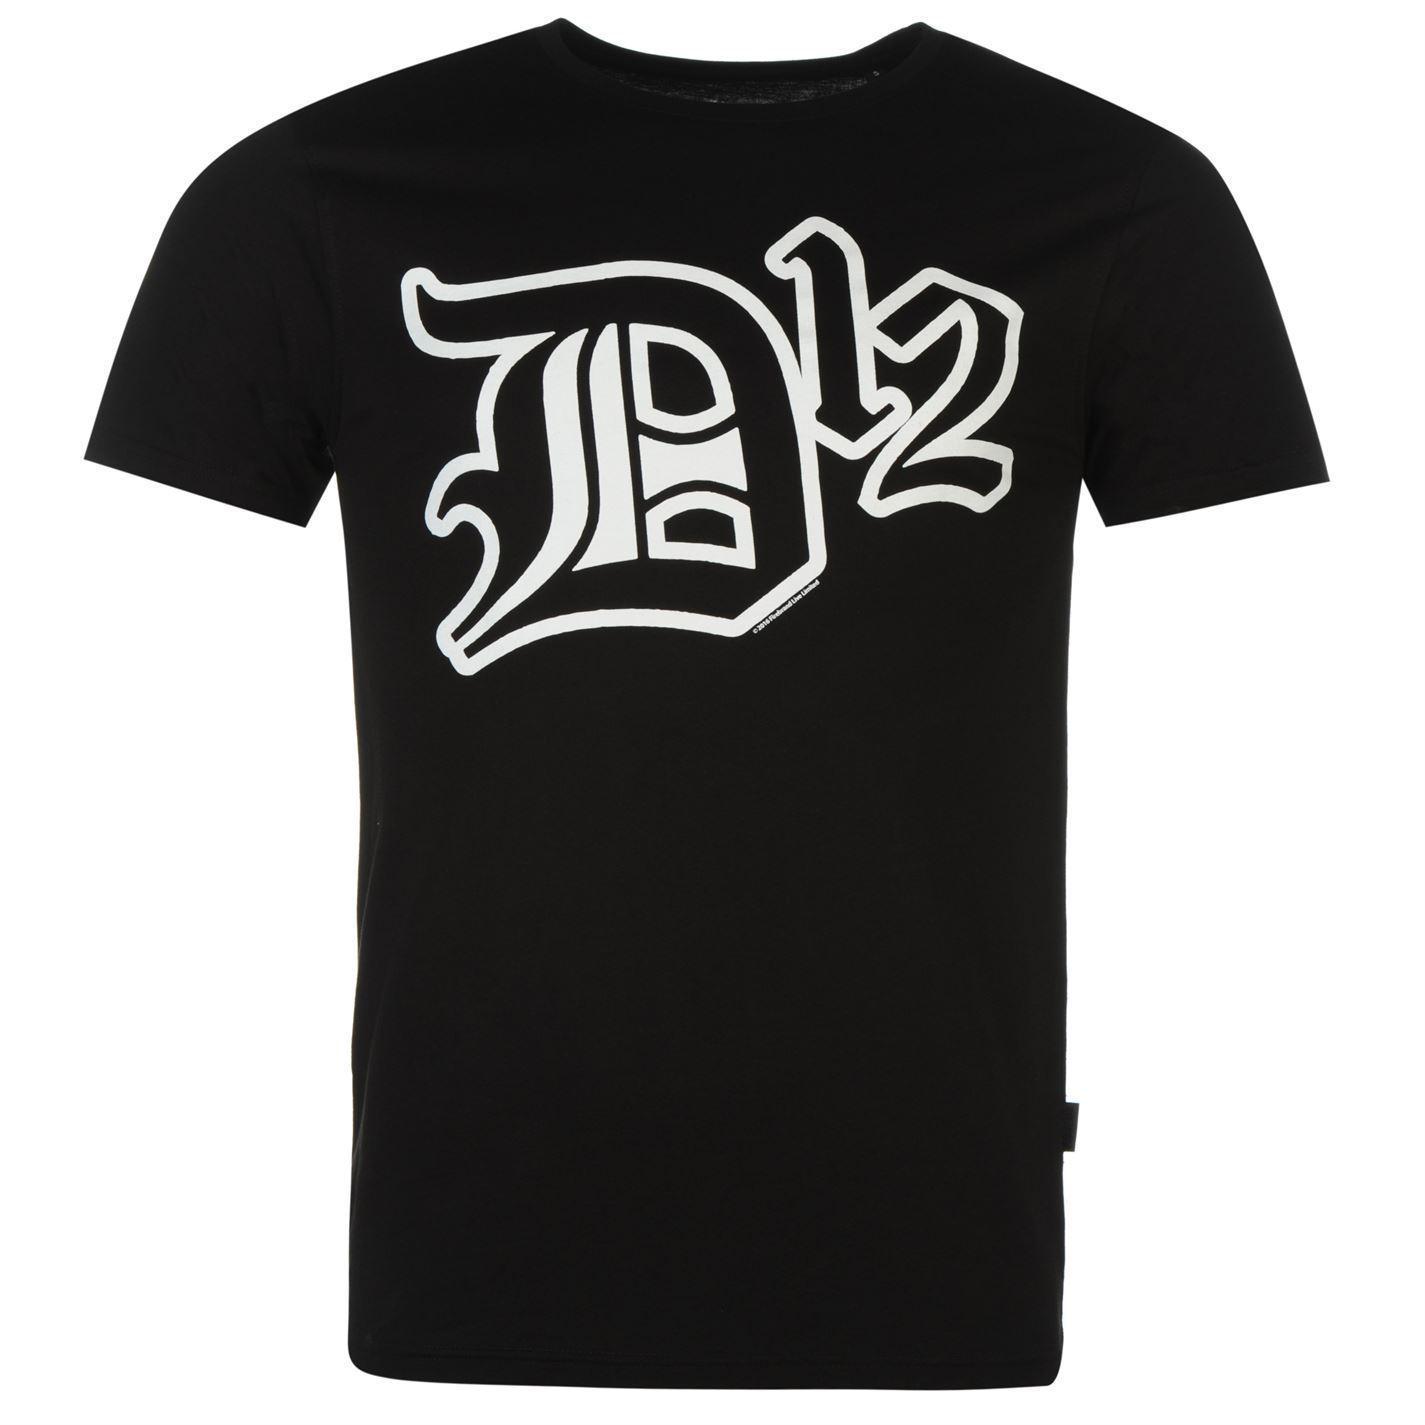 D12 Logo - D12 Logo T Shirt Mens Black Casual Wear Top Tee Shirt T Shirts Print ...